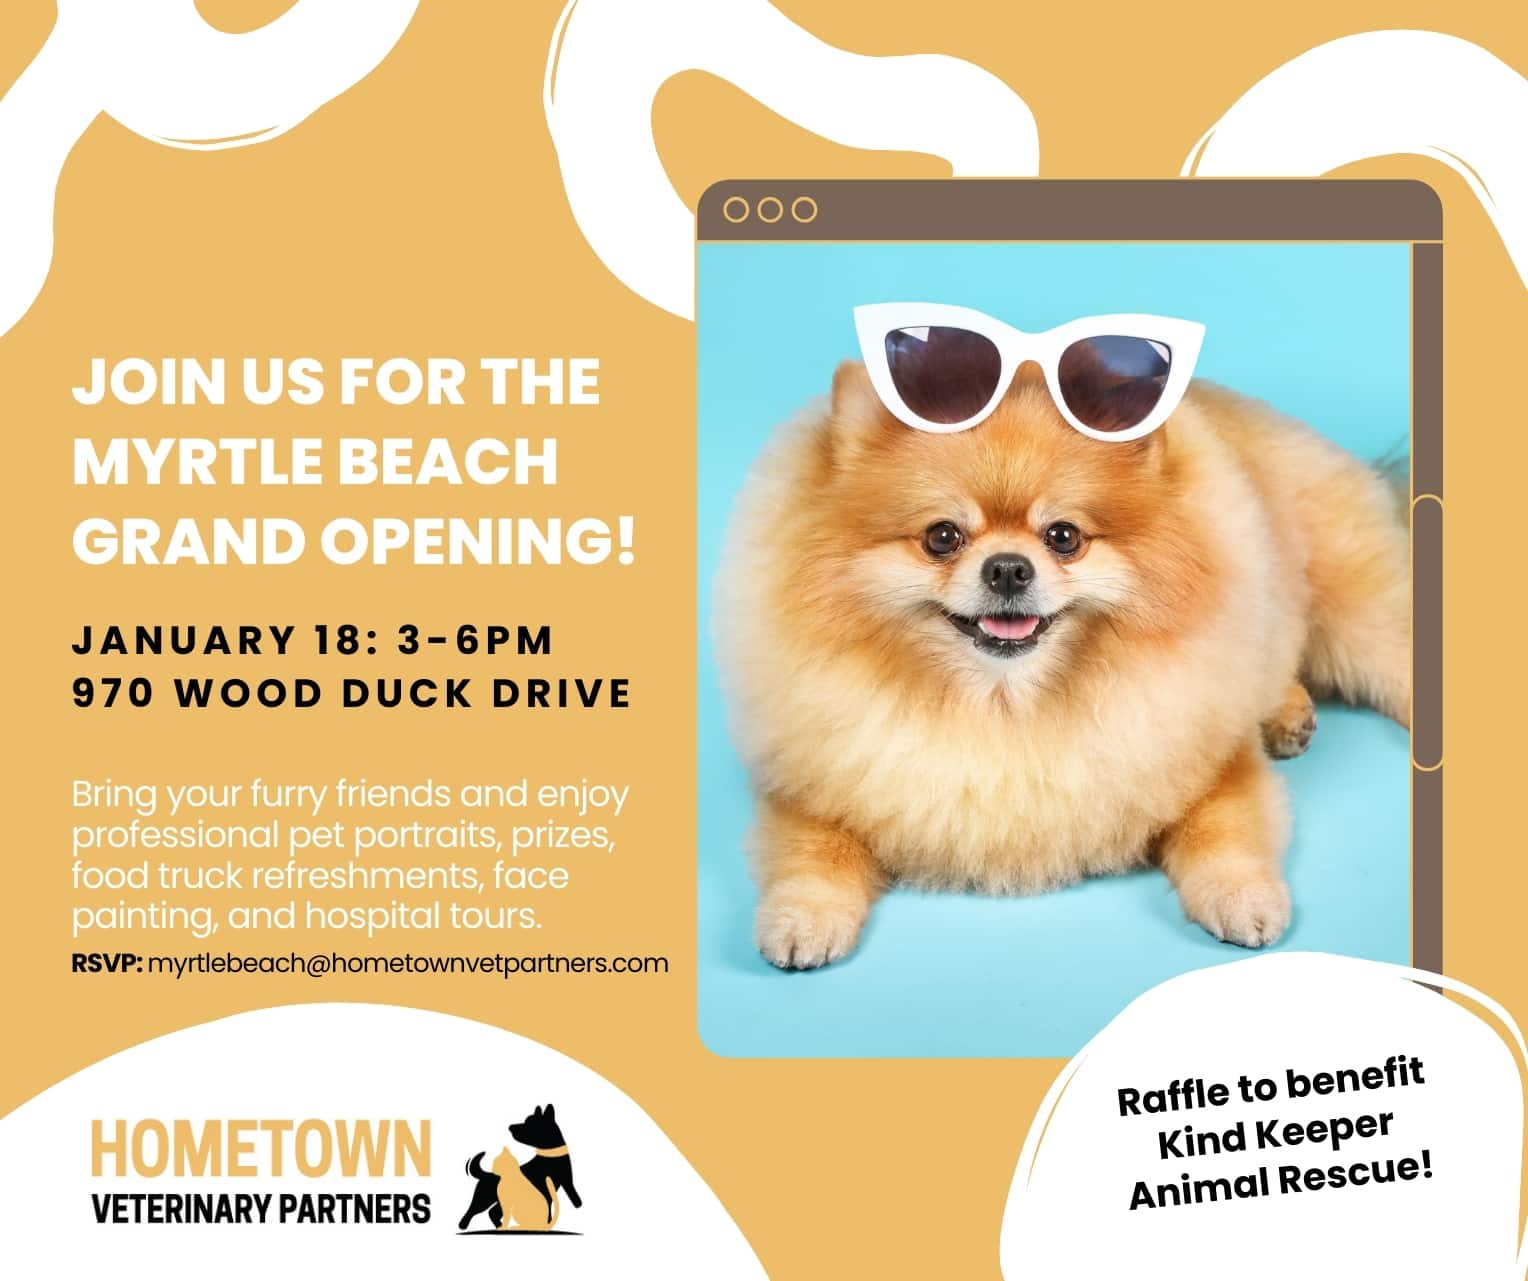 Grand Opening of Hometown Veterinary Partners Myrtle Beach